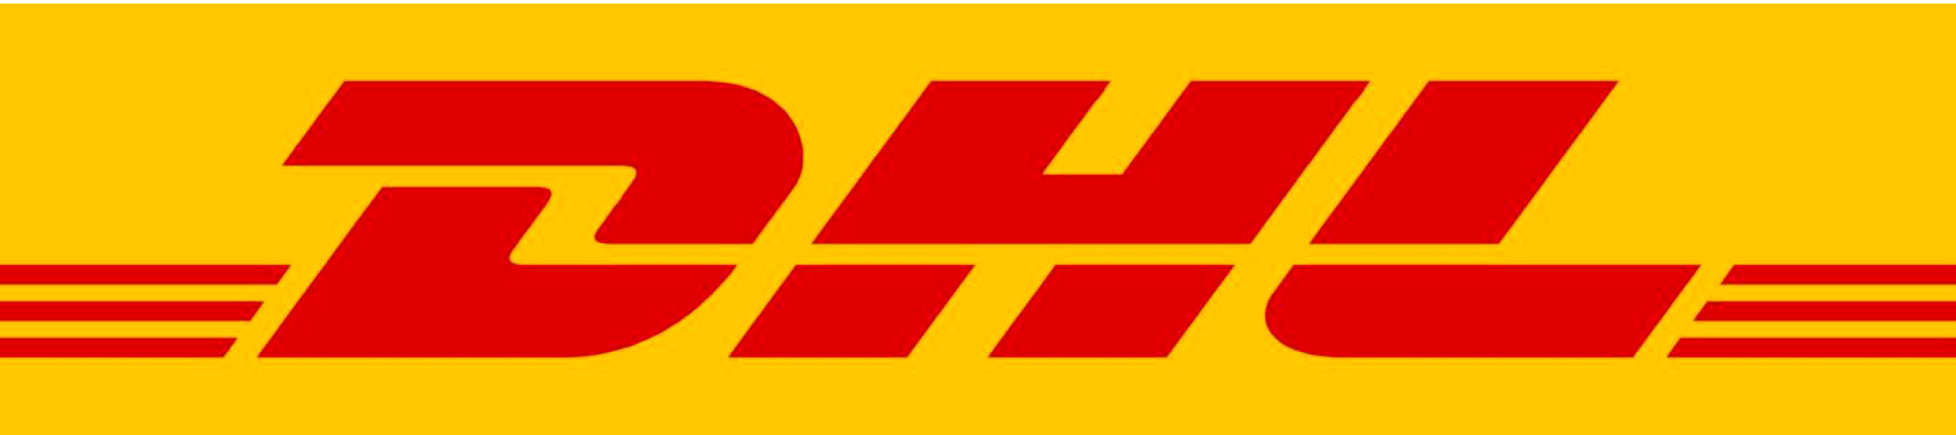 logo de DHL Express